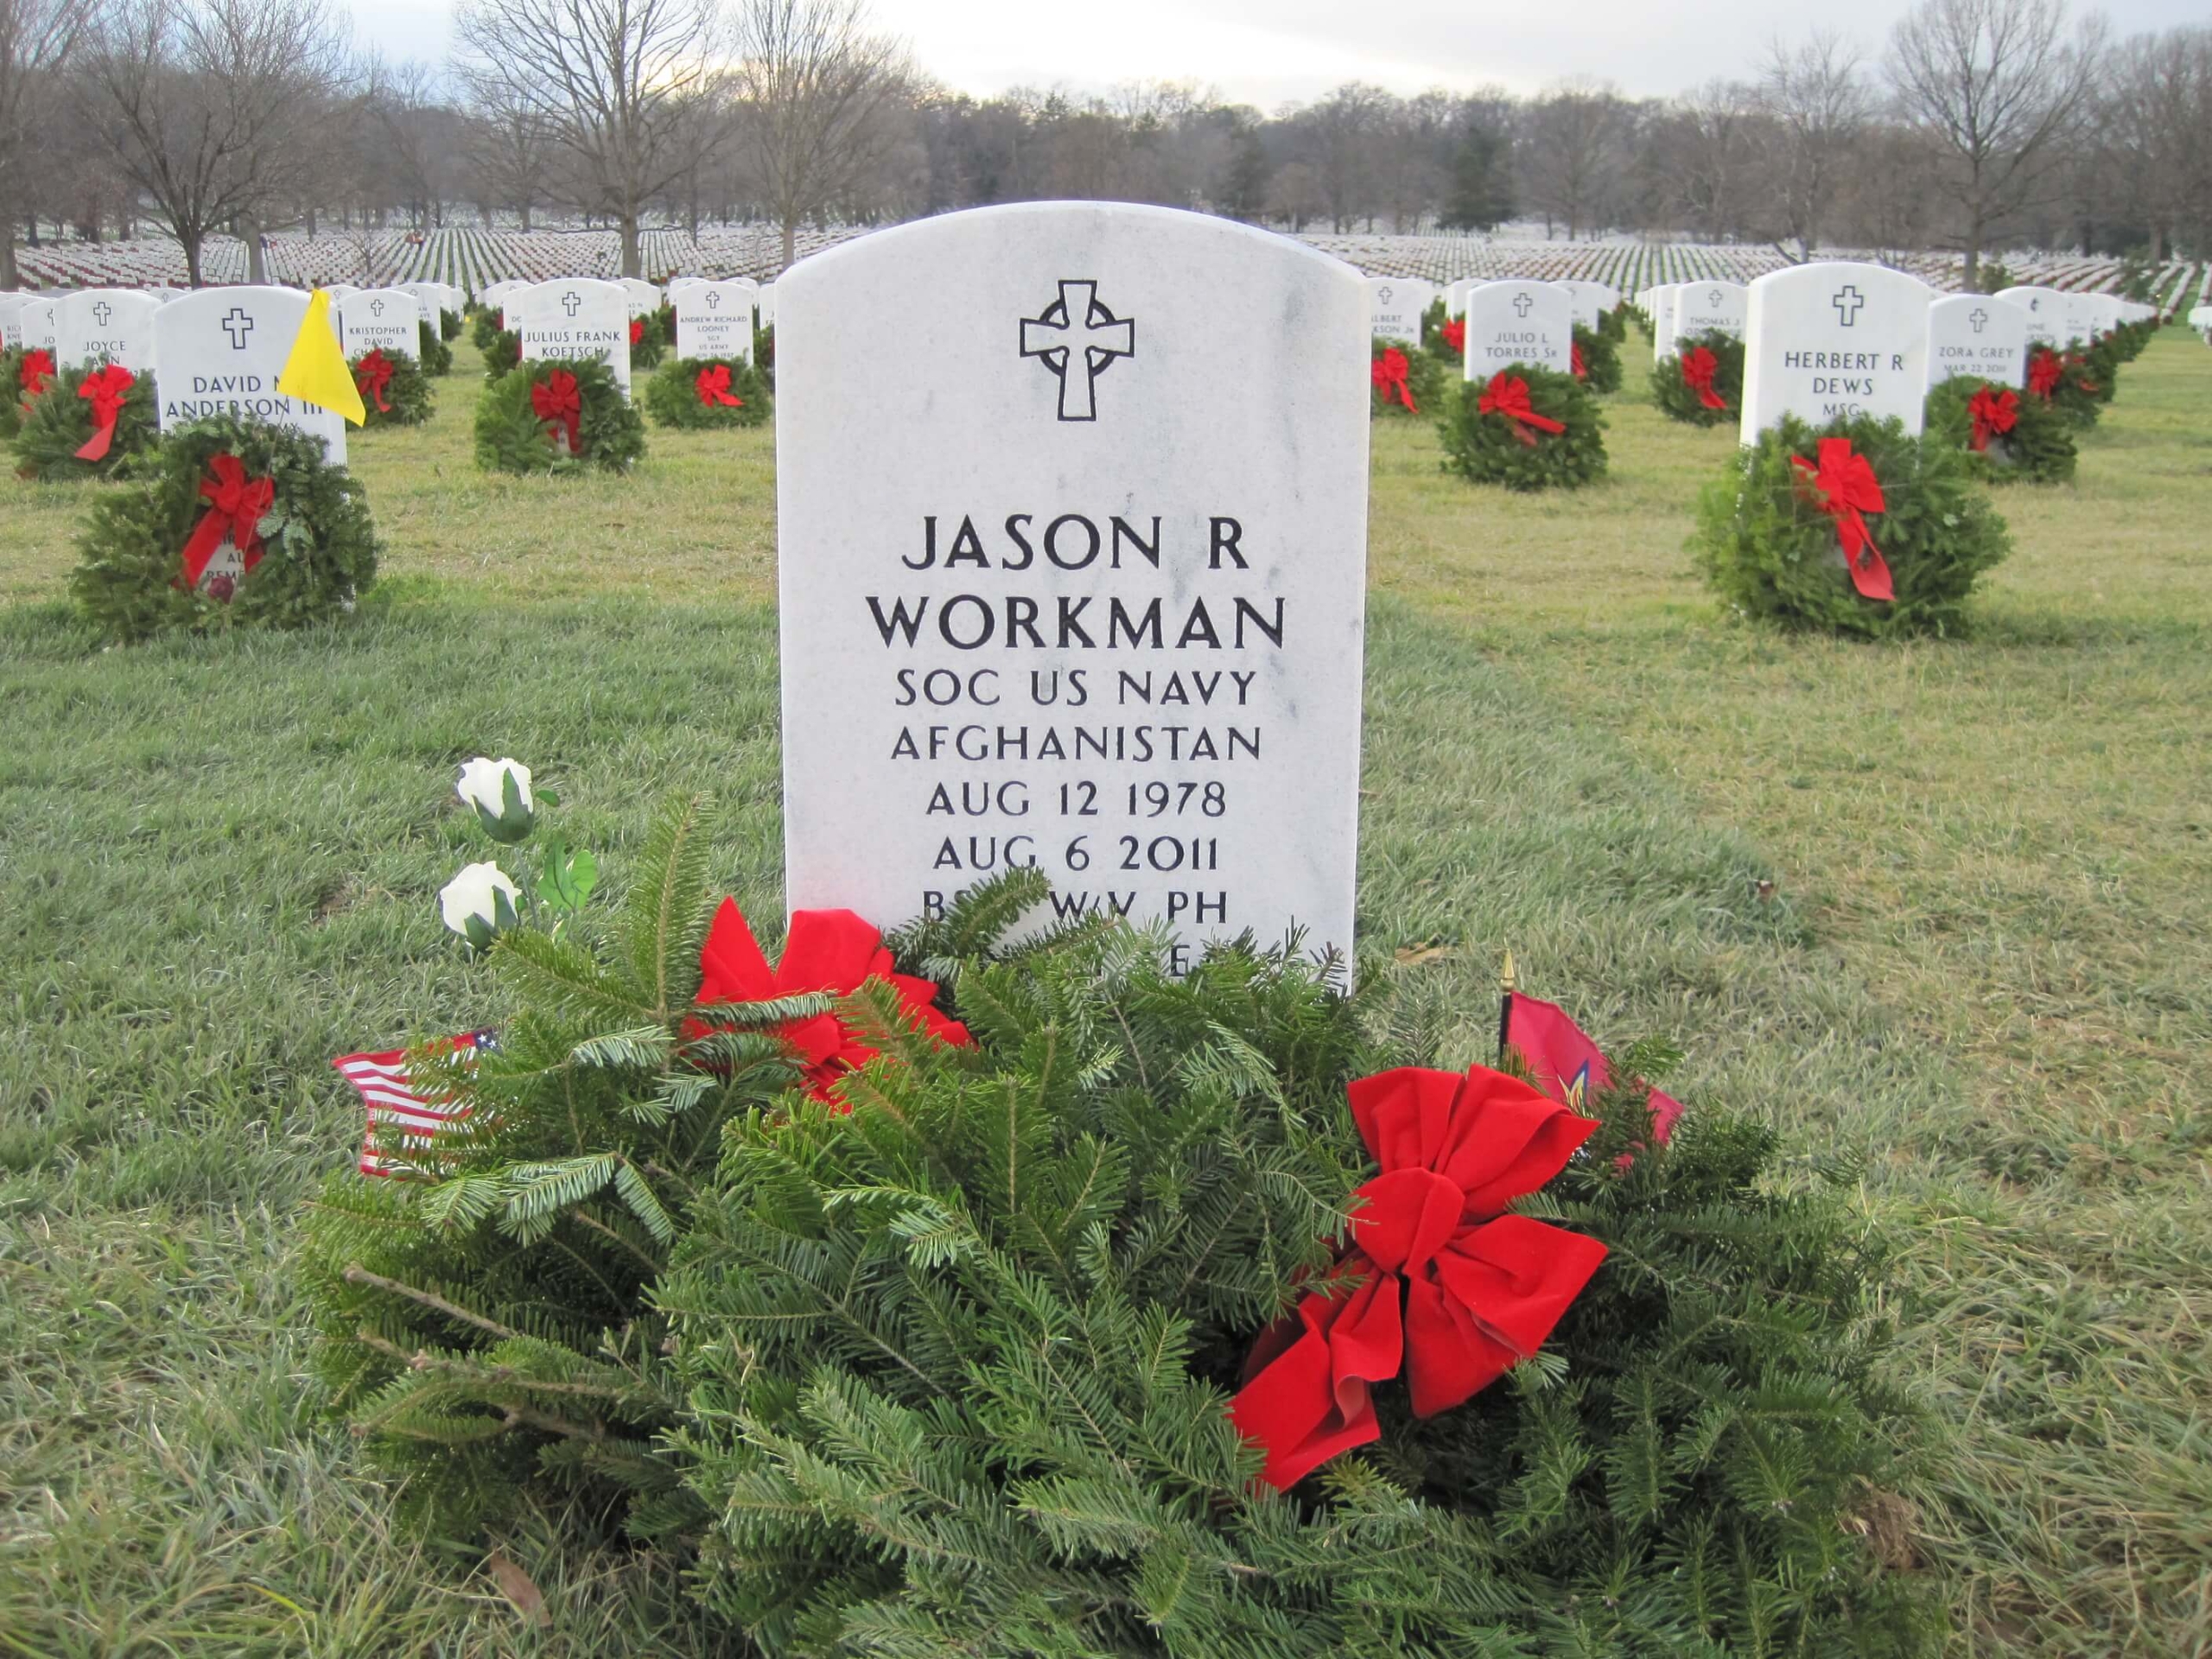 jrworkman-gravesite-photo-by-eileen-horan-february-2012-003